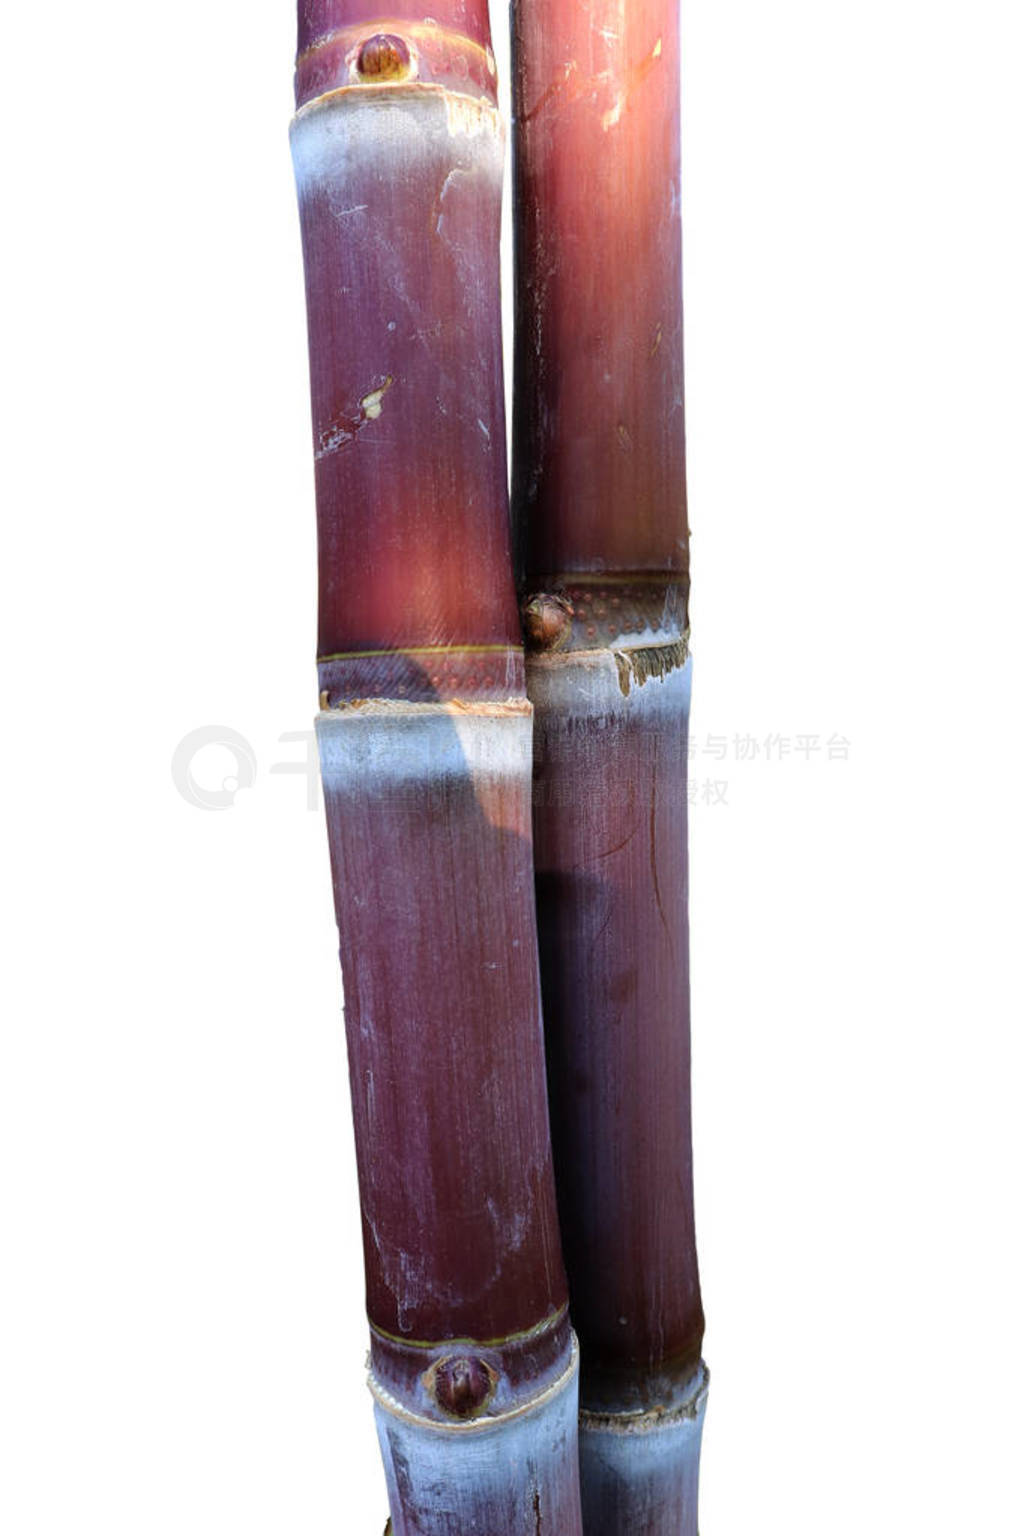 Sugar cane, Cane, Sugarcane piece fresh, sugar cane isolated on